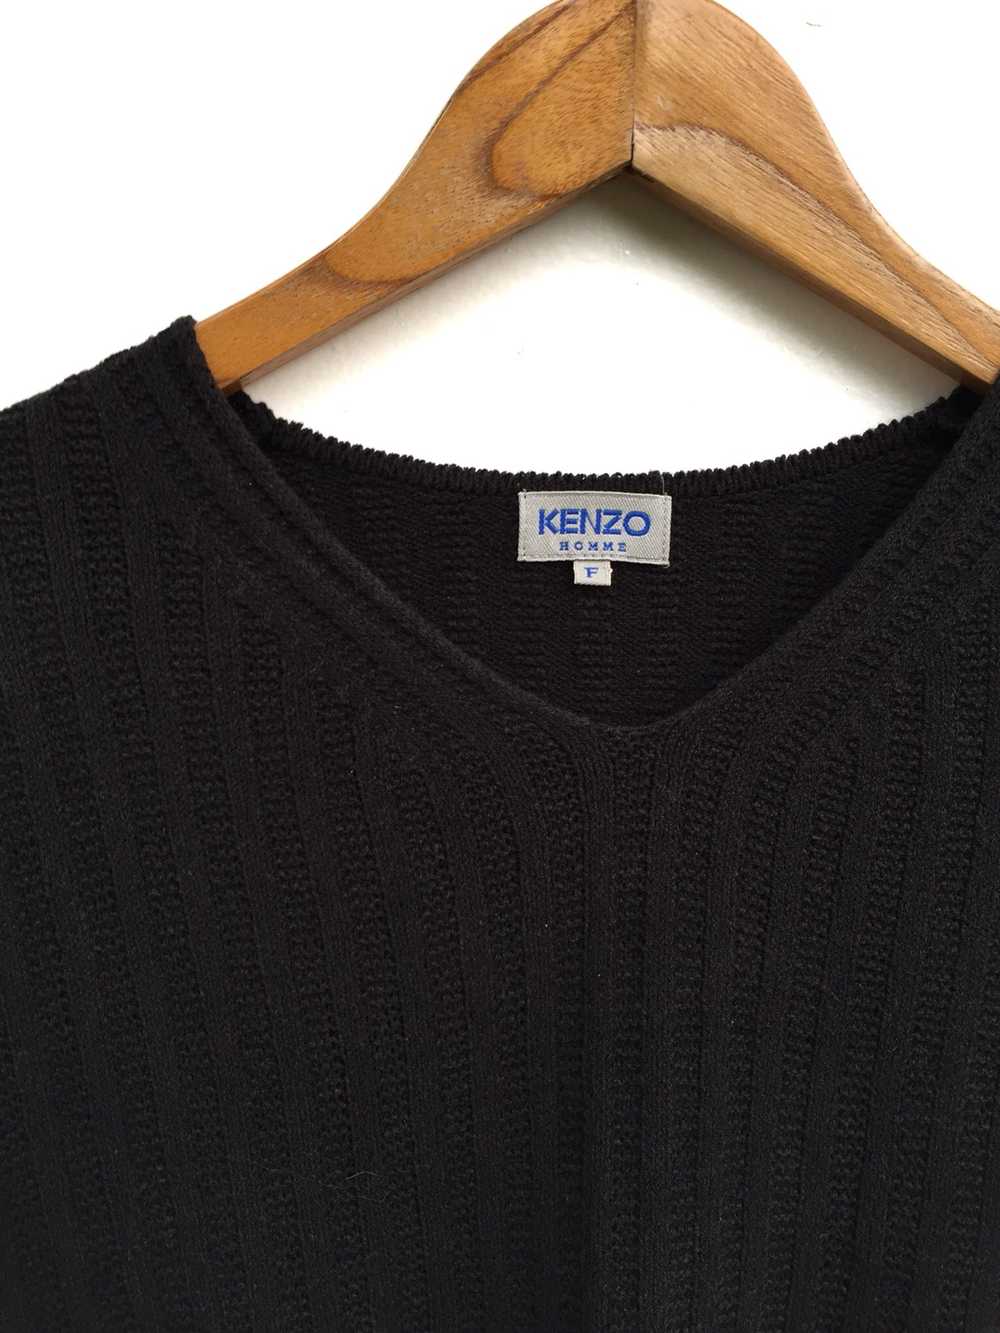 Vintage Japanese Brand Kenzo Hand Knit Black Swea… - image 5